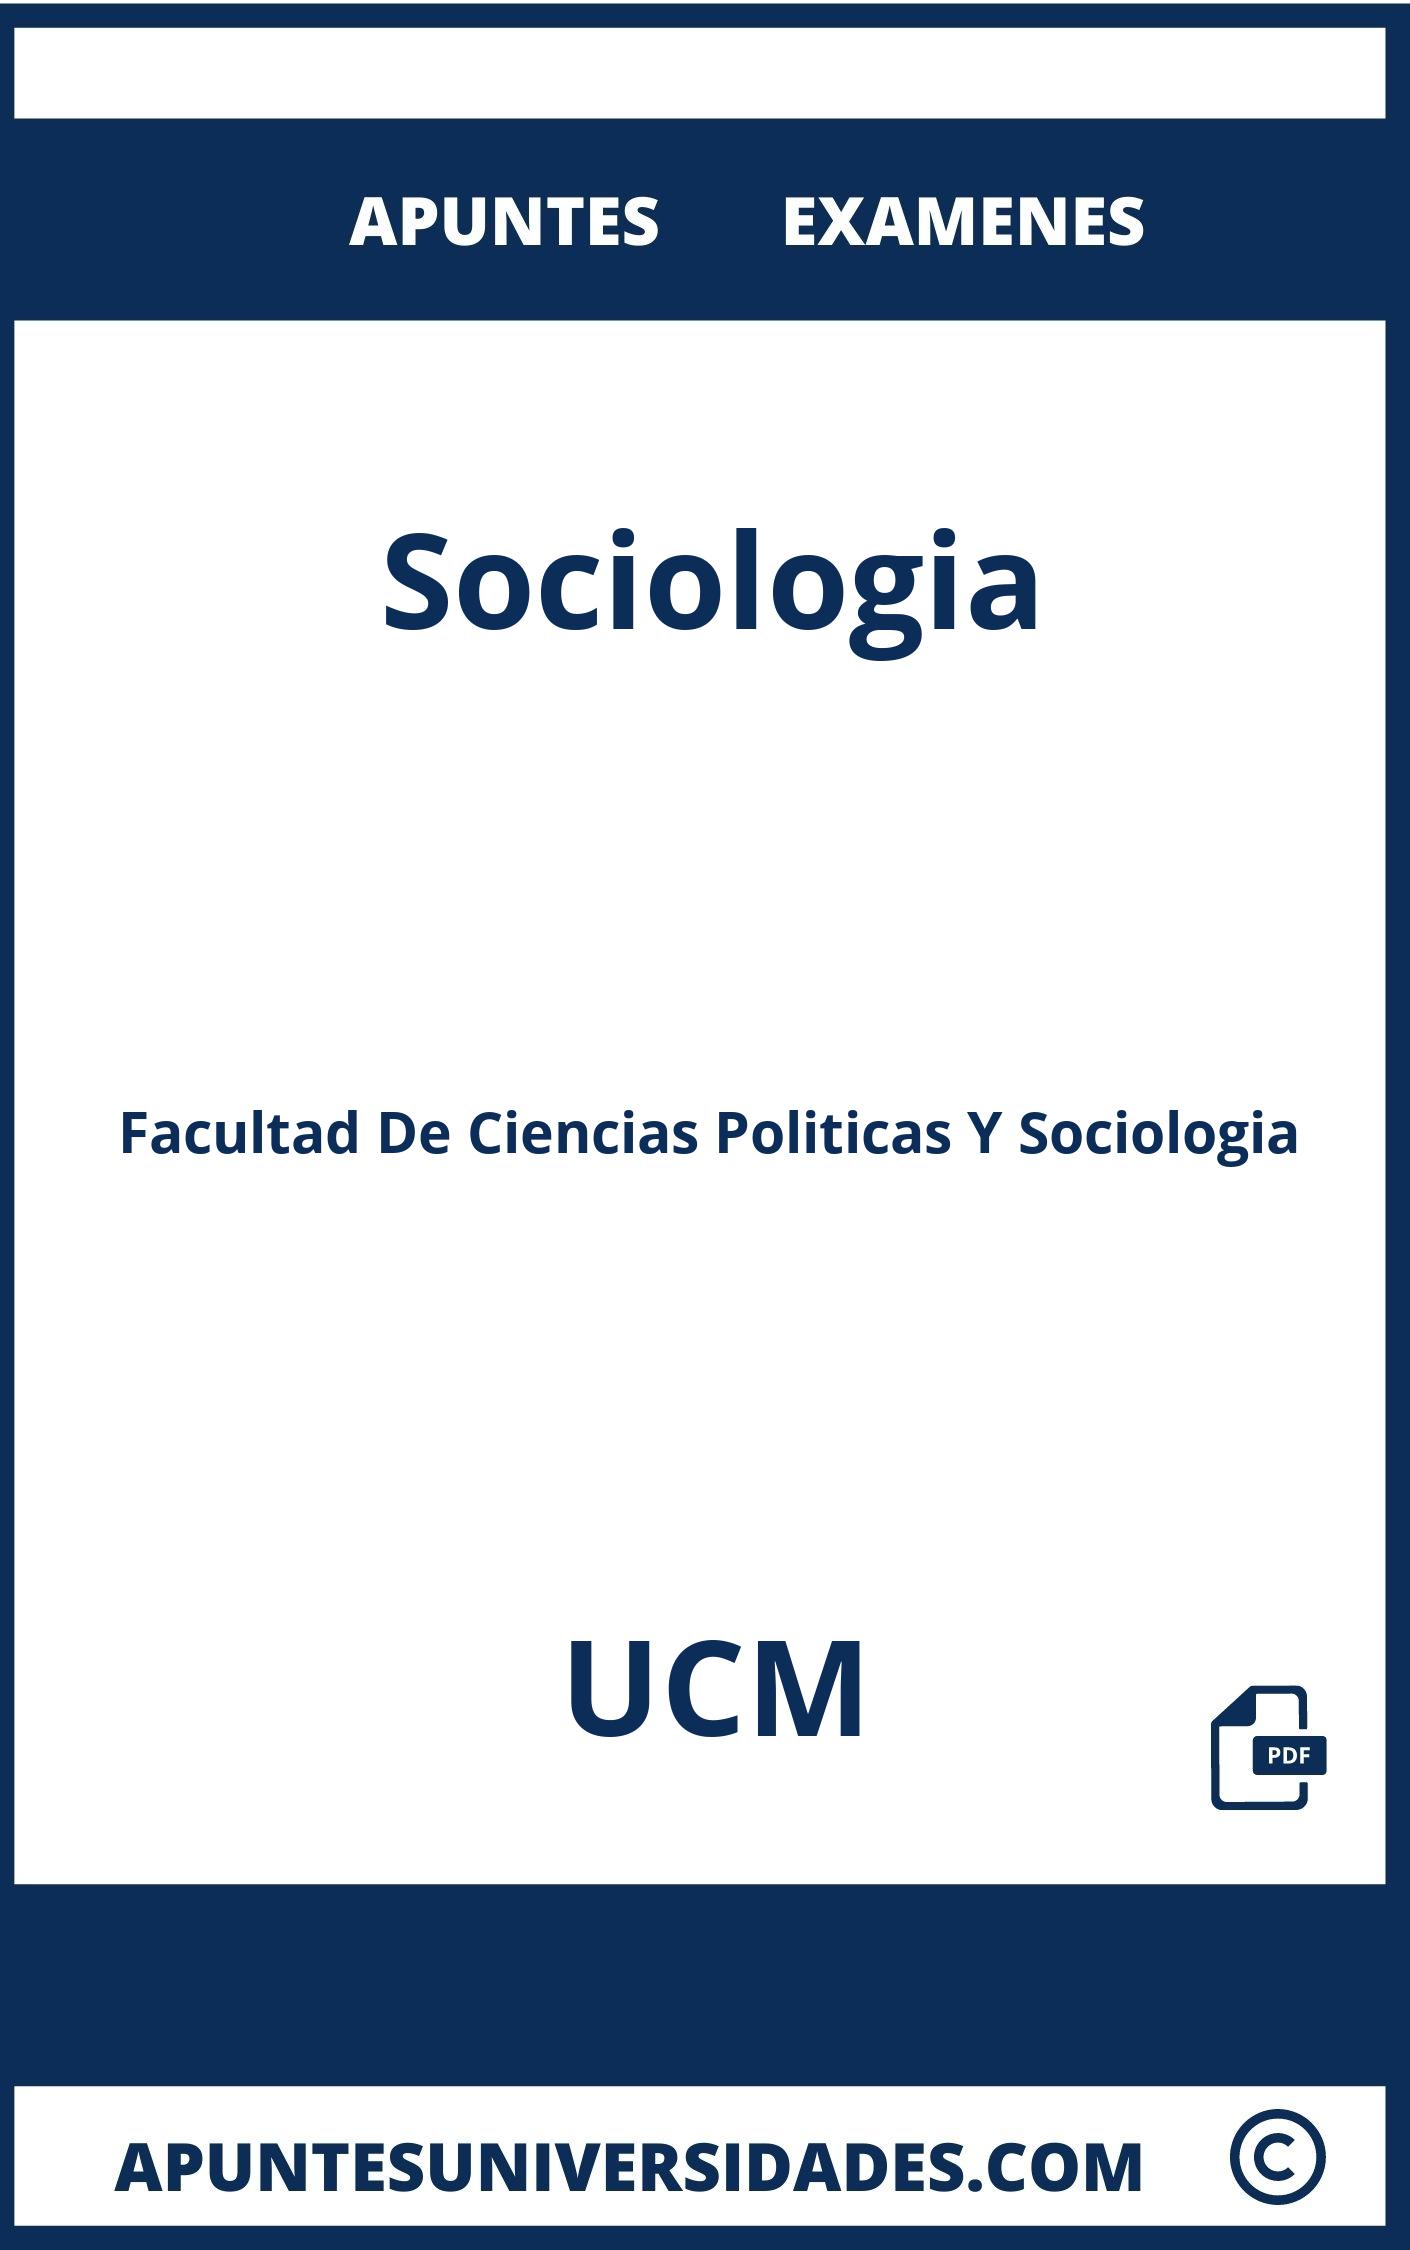 Apuntes Examenes Sociologia UCM